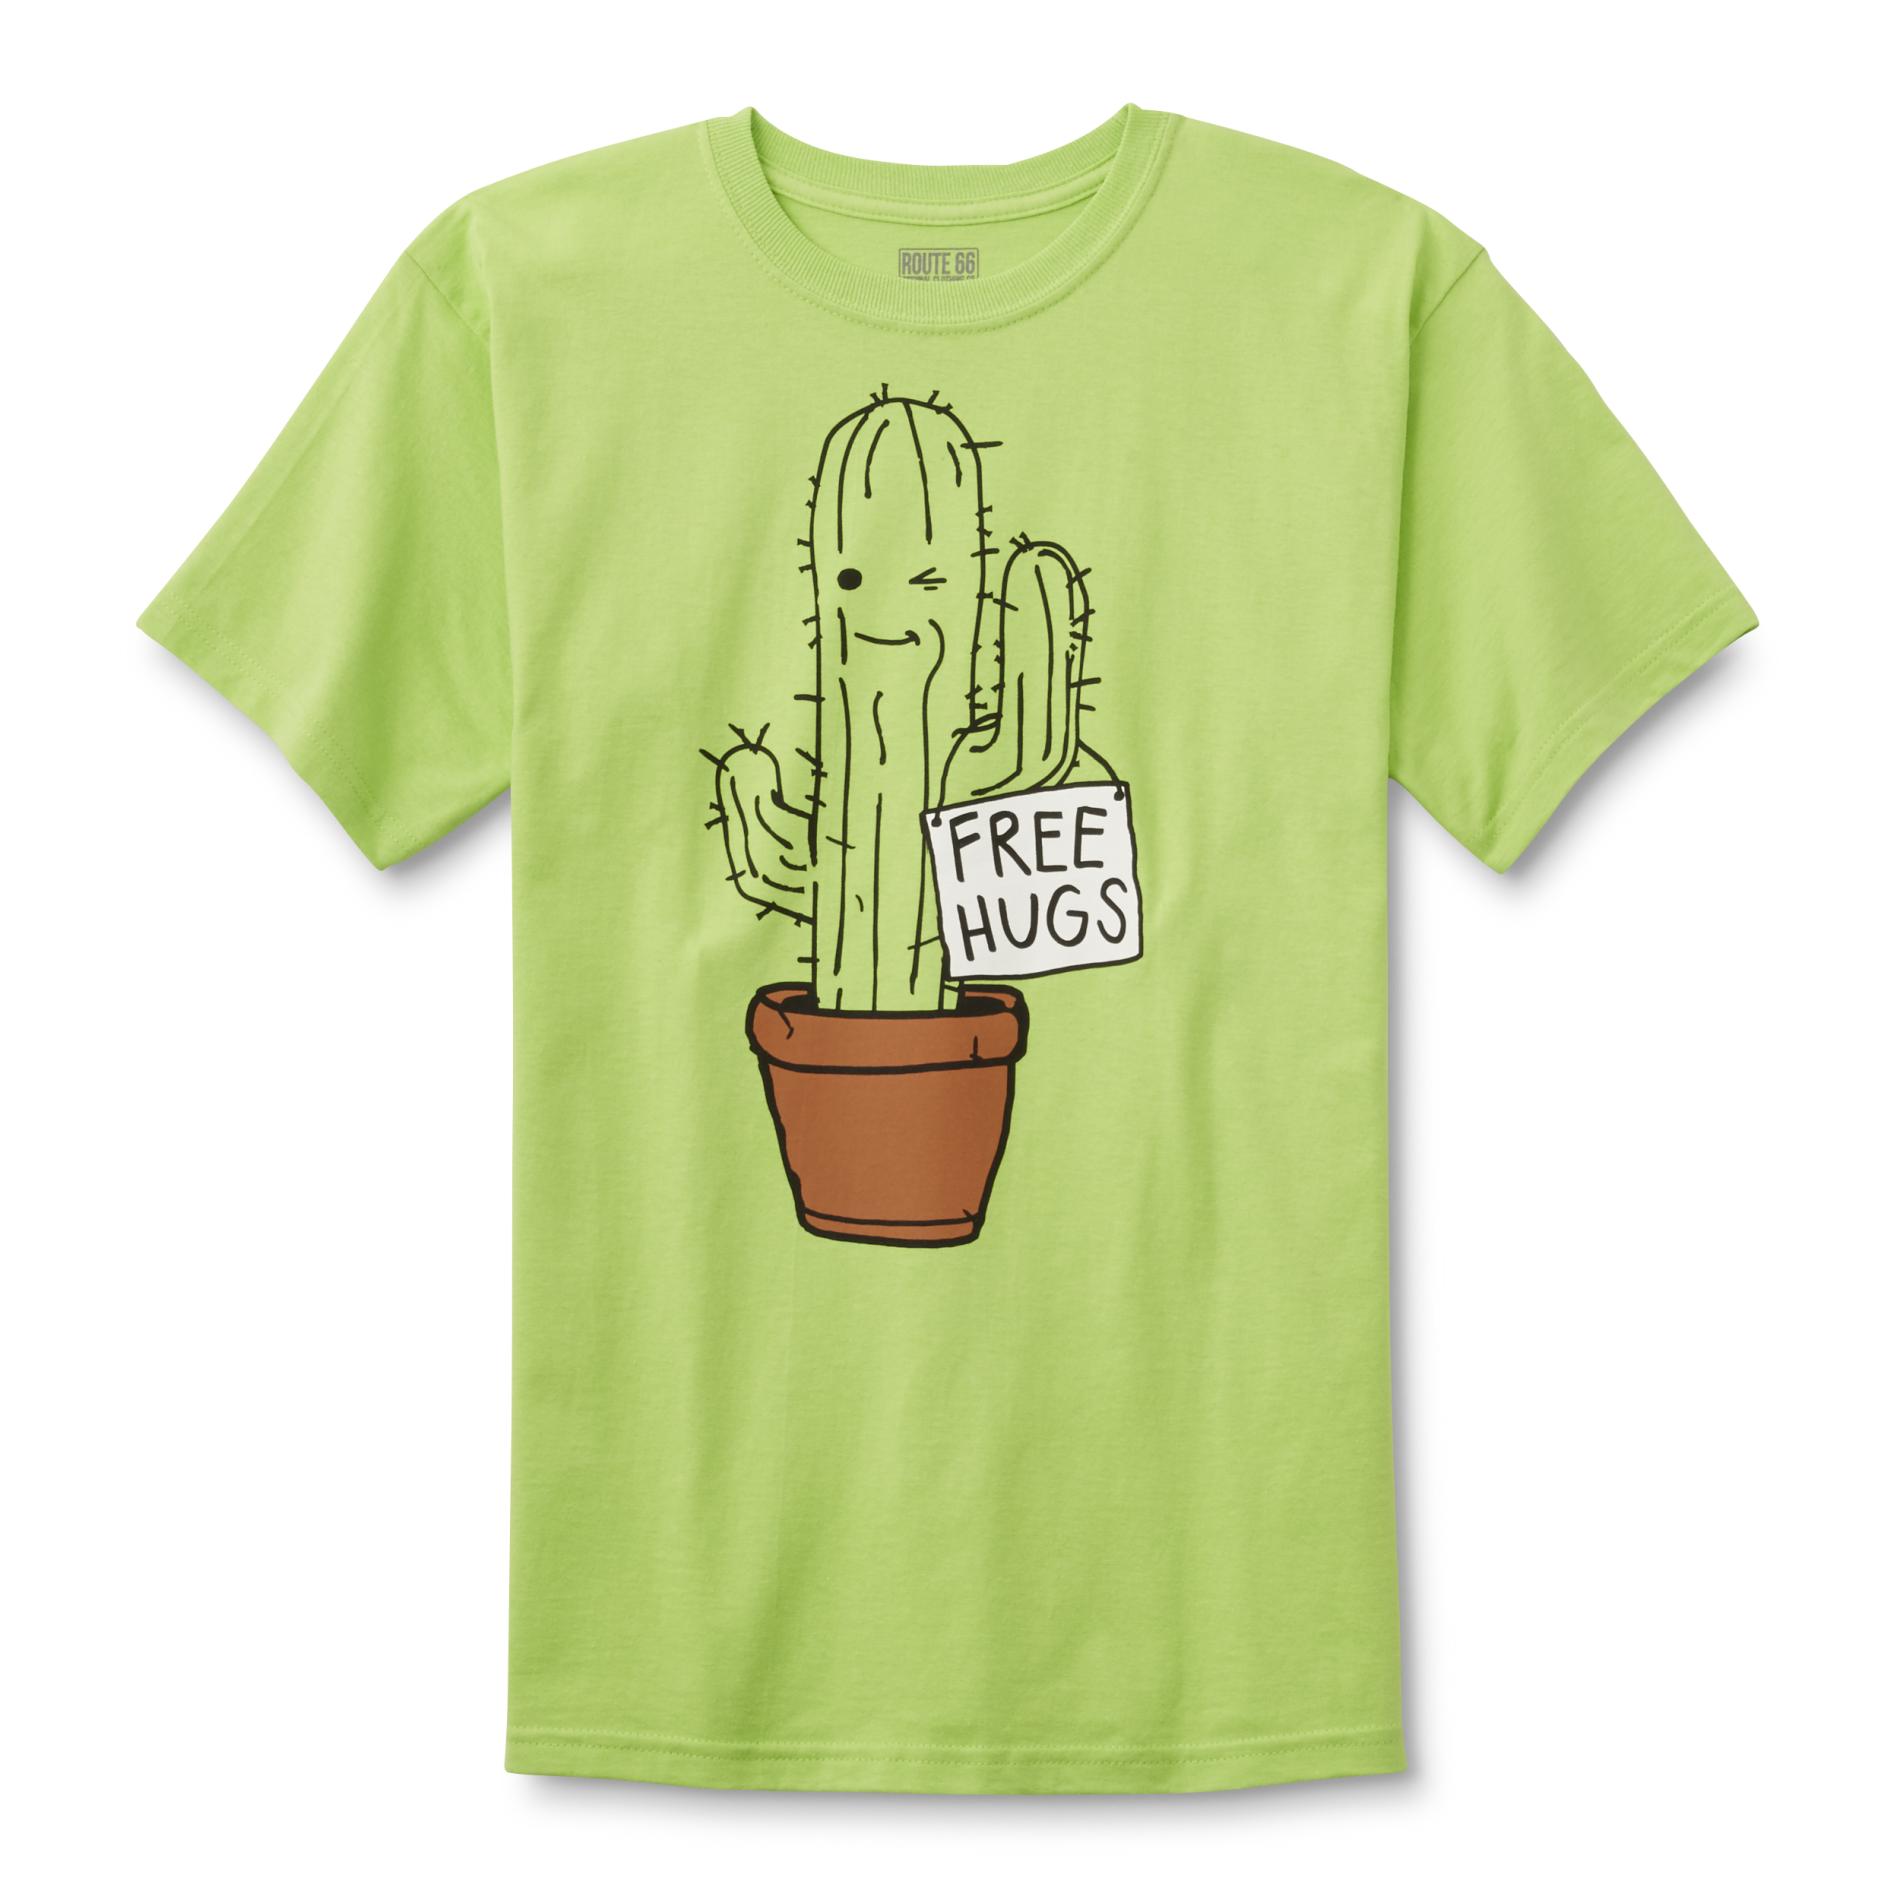 Route 66 Boys' Graphic T-Shirt - Free Hugs Cactus